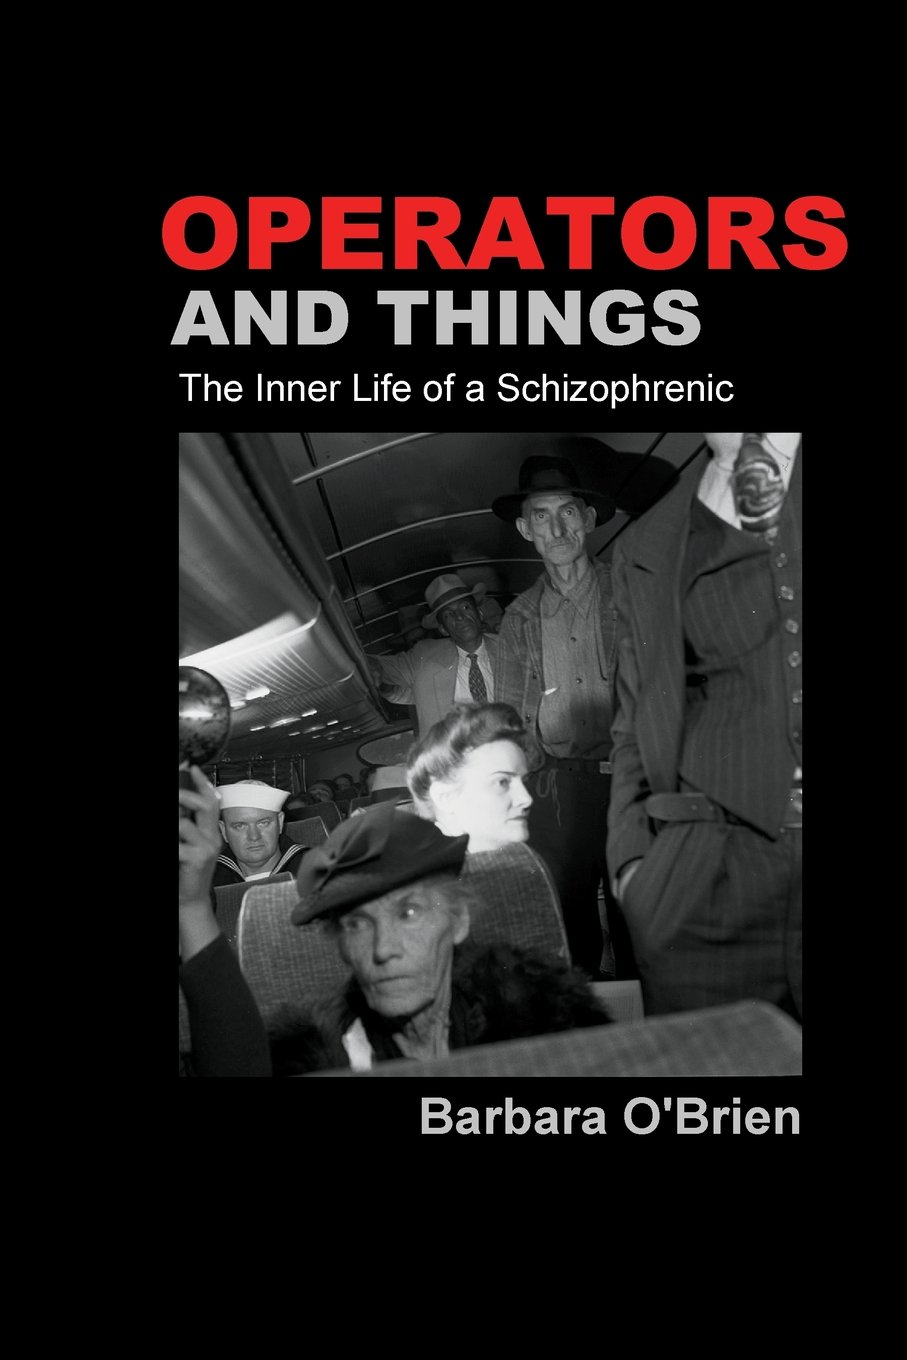 books about schizophrenia12